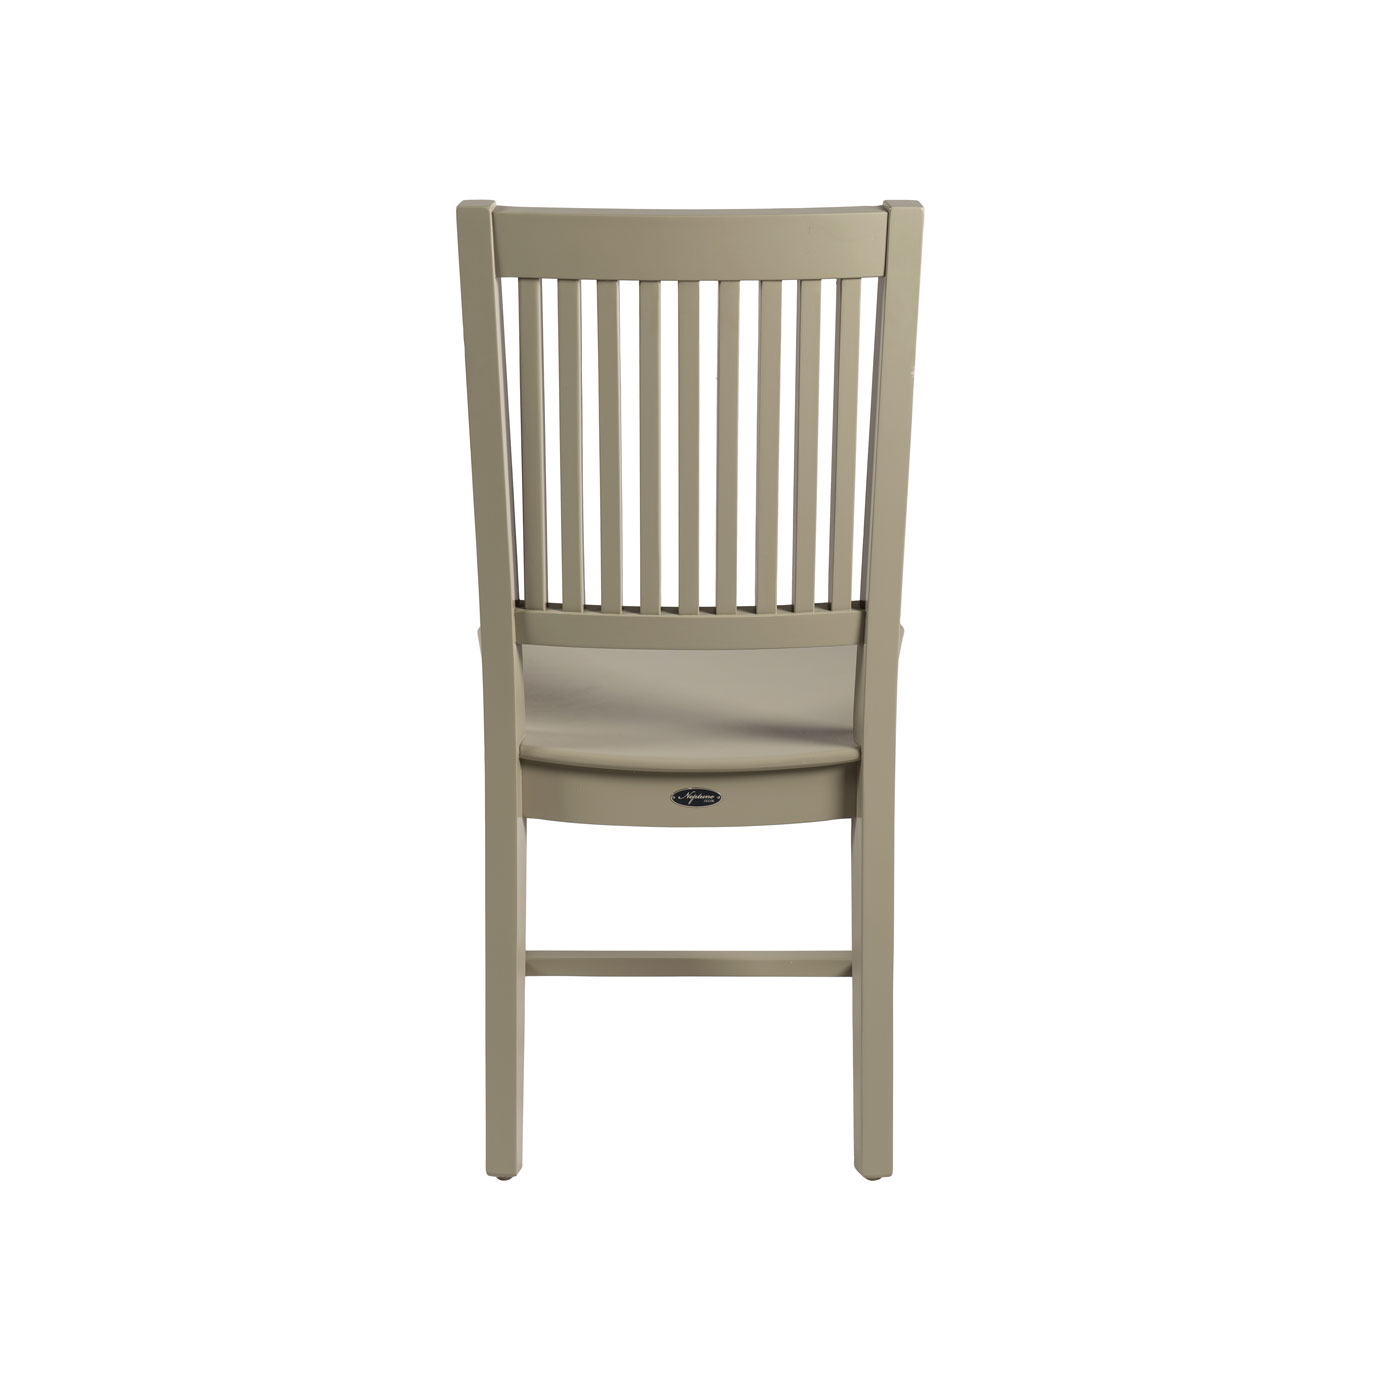 Harrogate Dining Chair